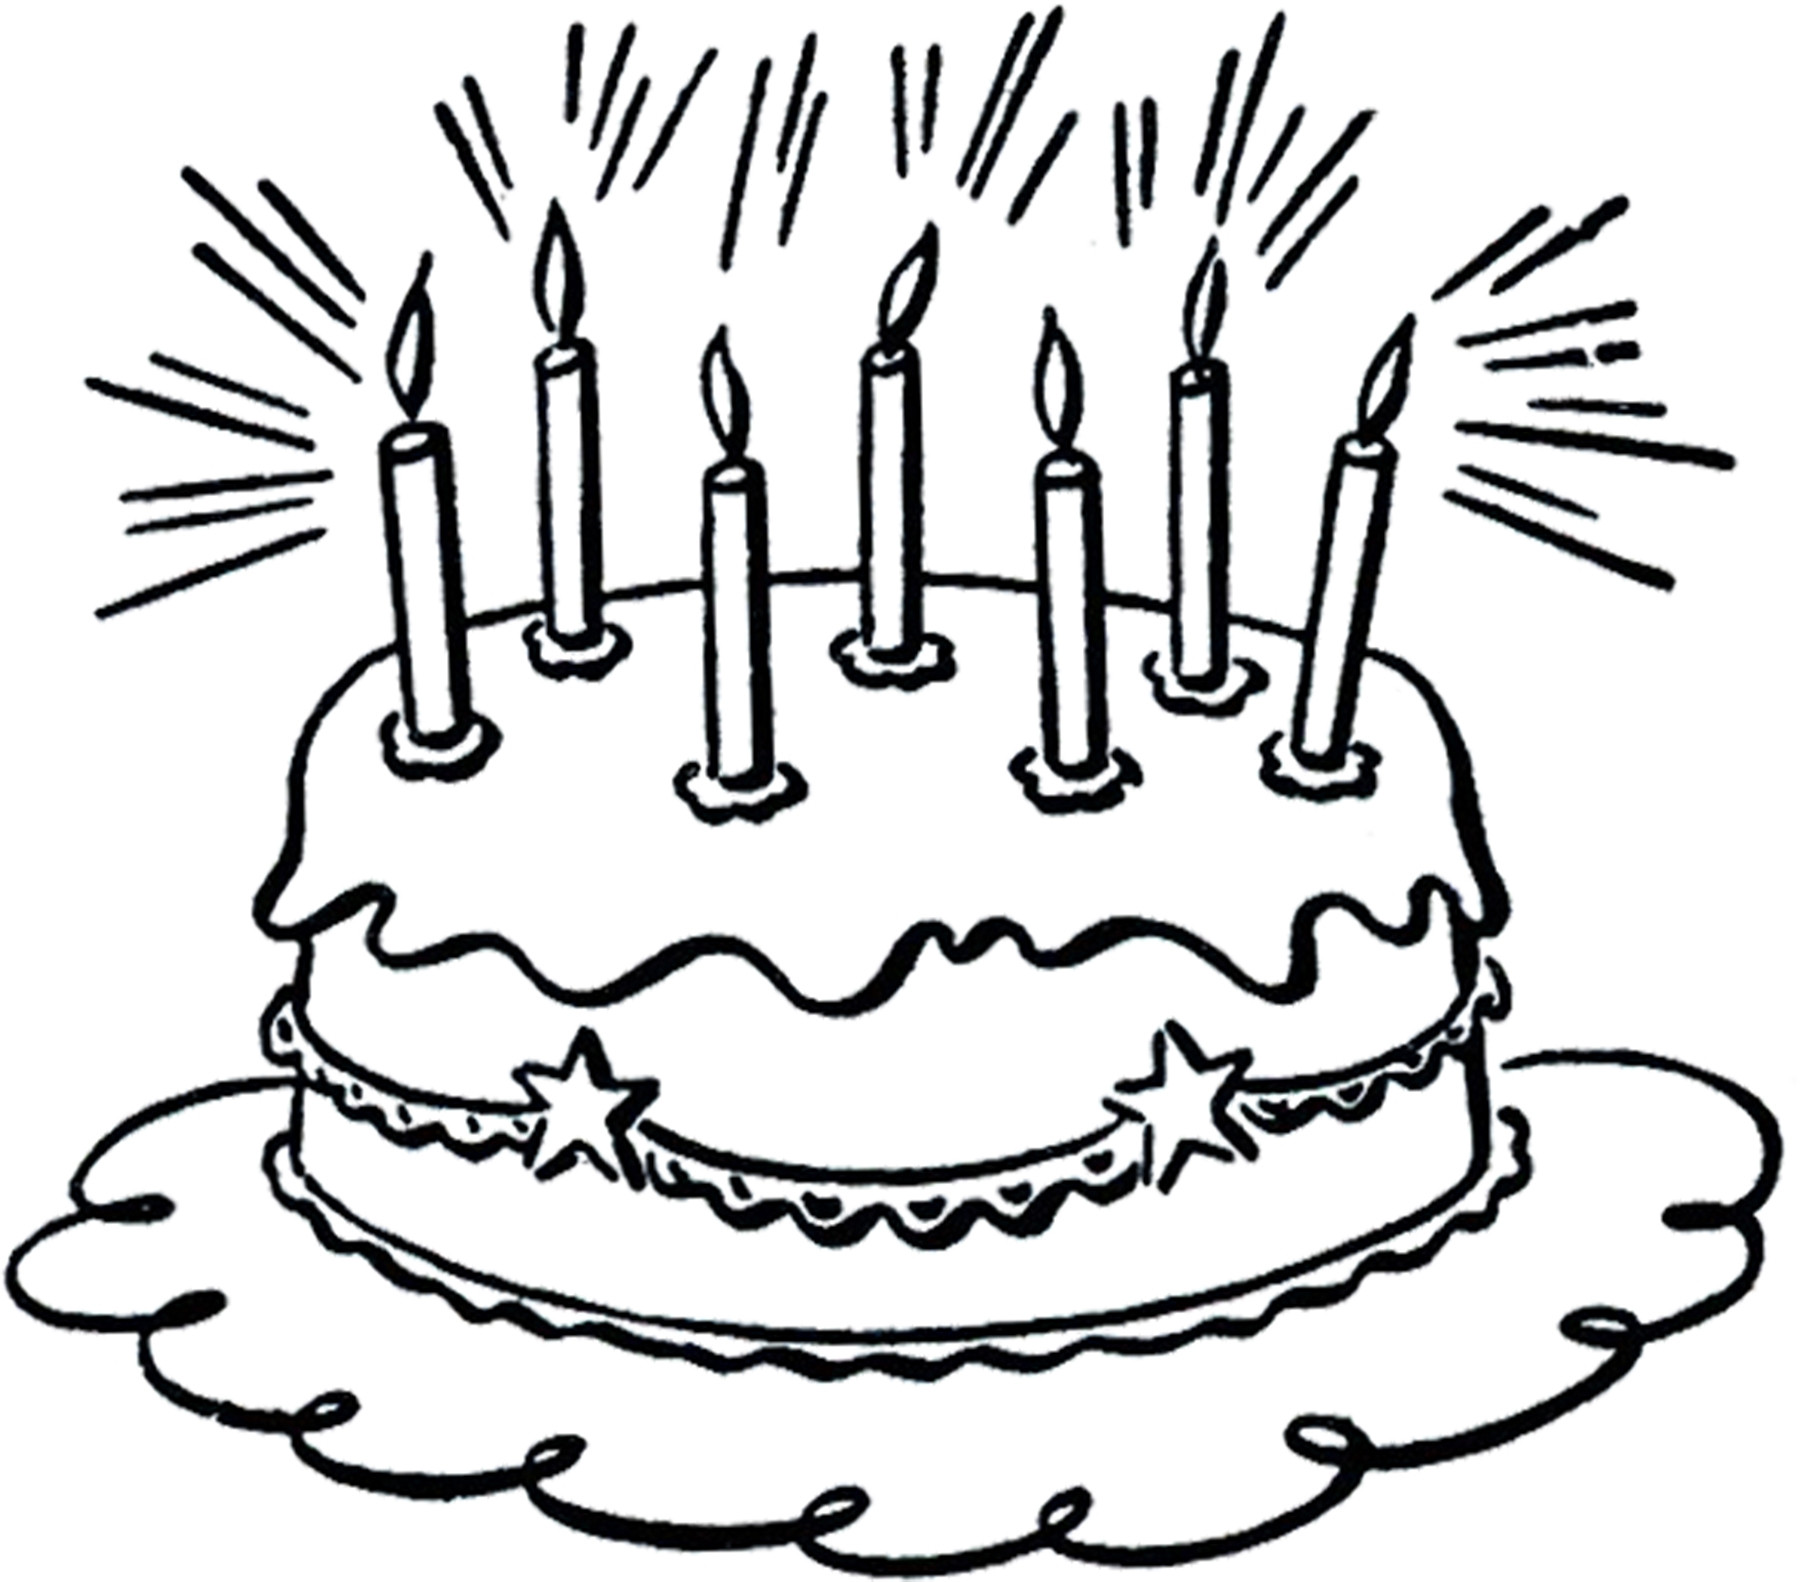 Best ideas about Birthday Cake Clip Art Black And White
. Save or Pin Free Birthday Cake Clip Art Black And White Download Free Now.